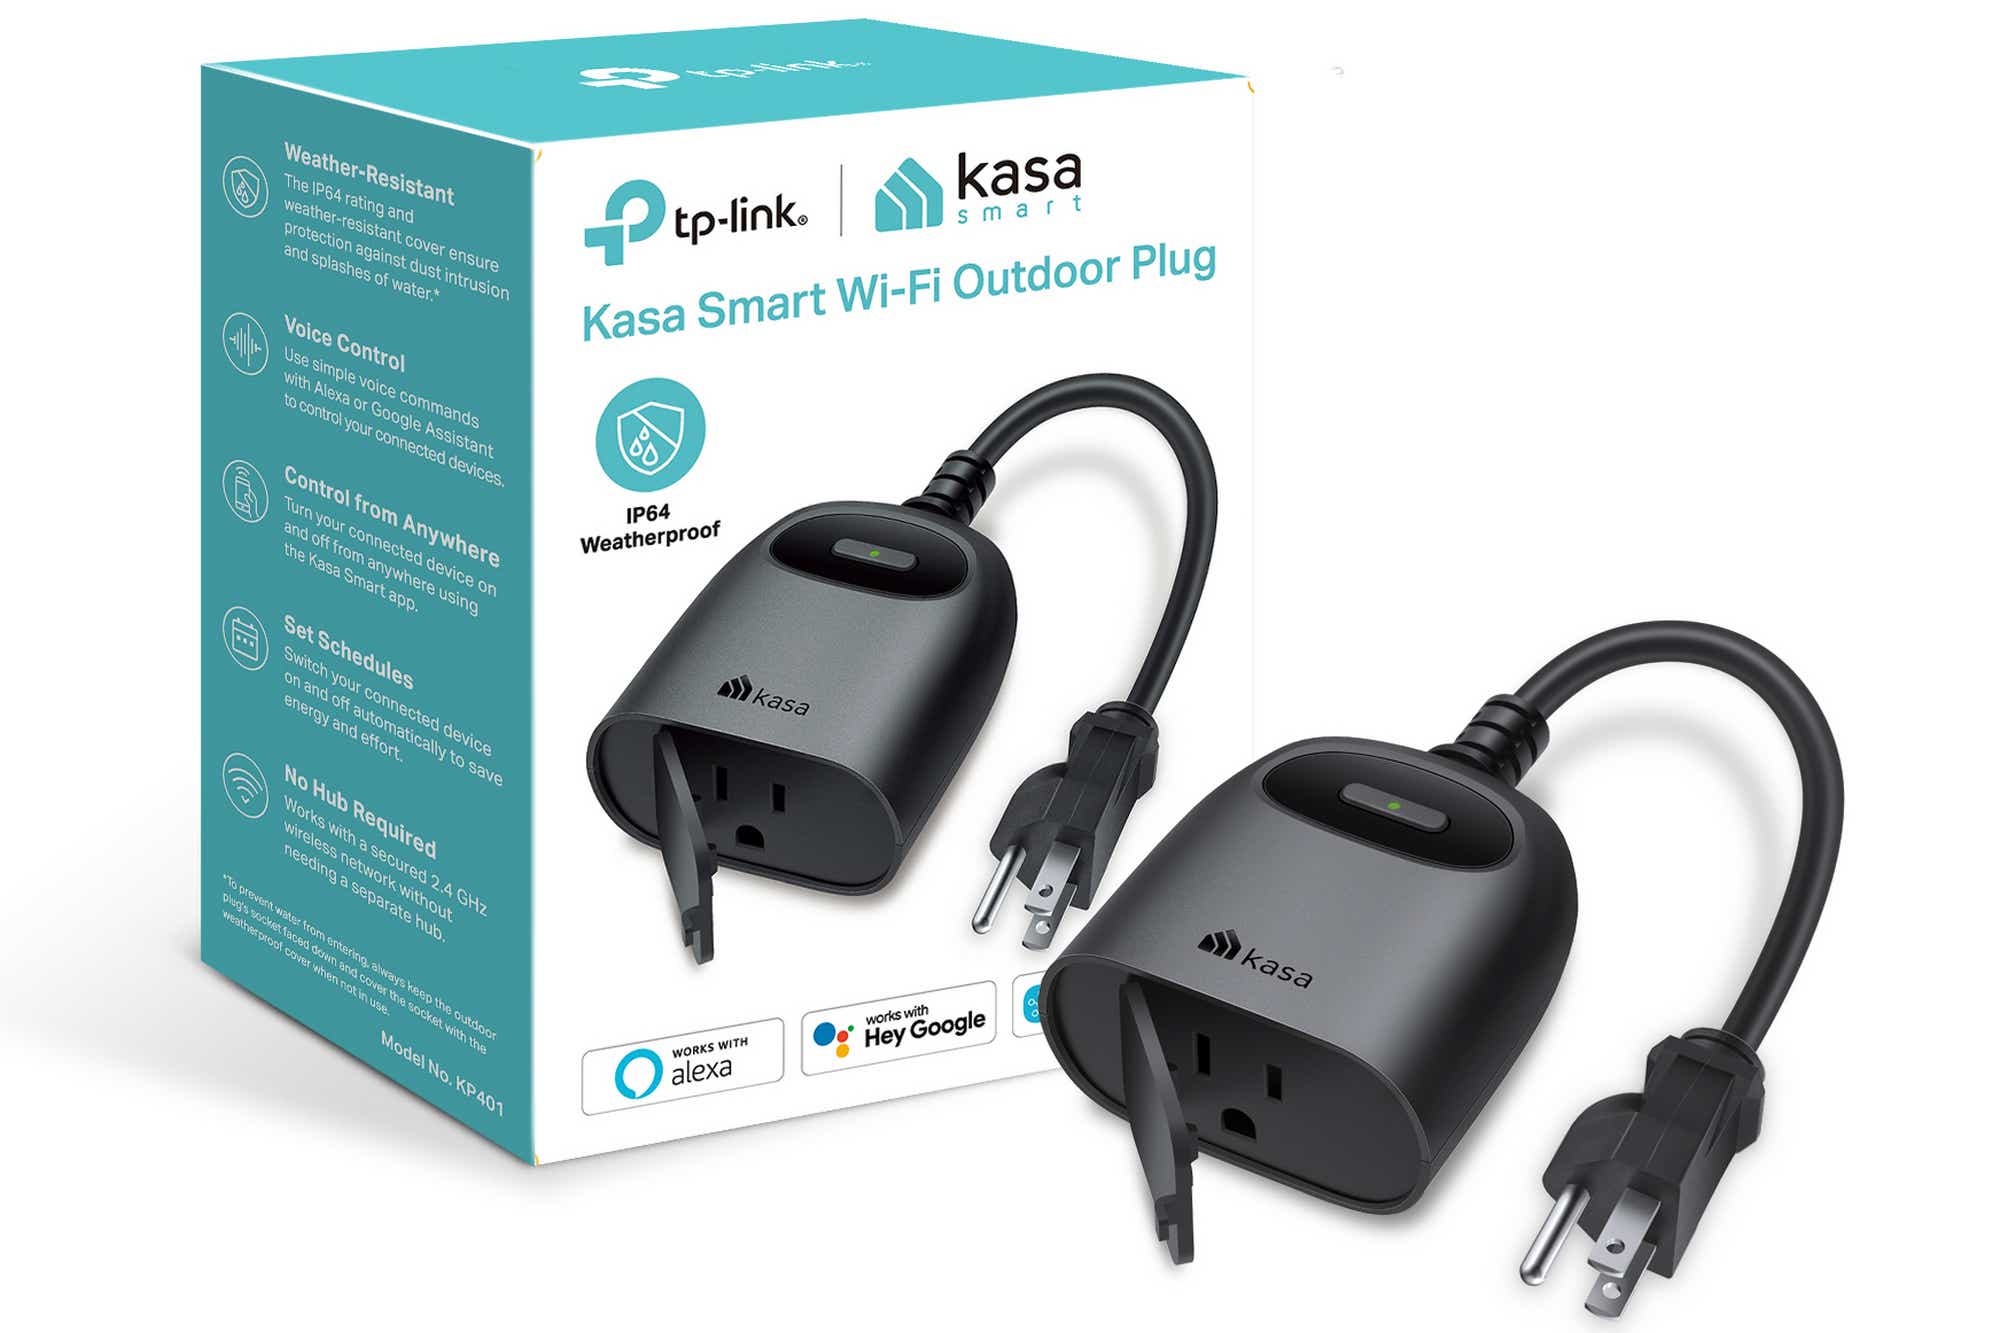 TP-Link Kasa Smart Outdoor Plug (model KP401)